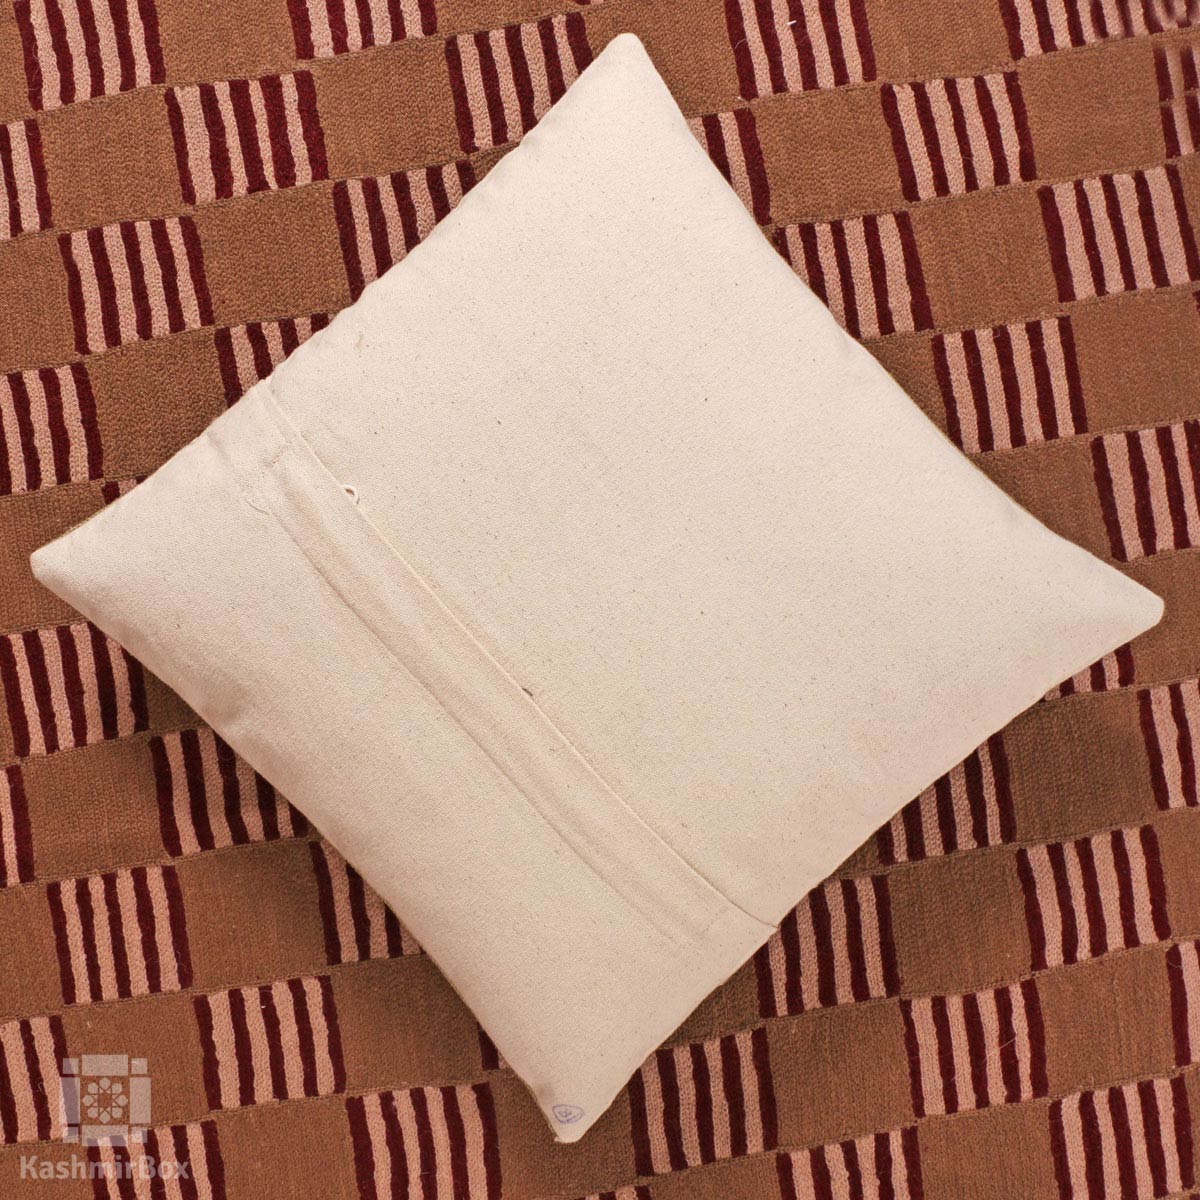 White Anchor Crewel Cushion Cover (Set of 3) - KashmirBox.com